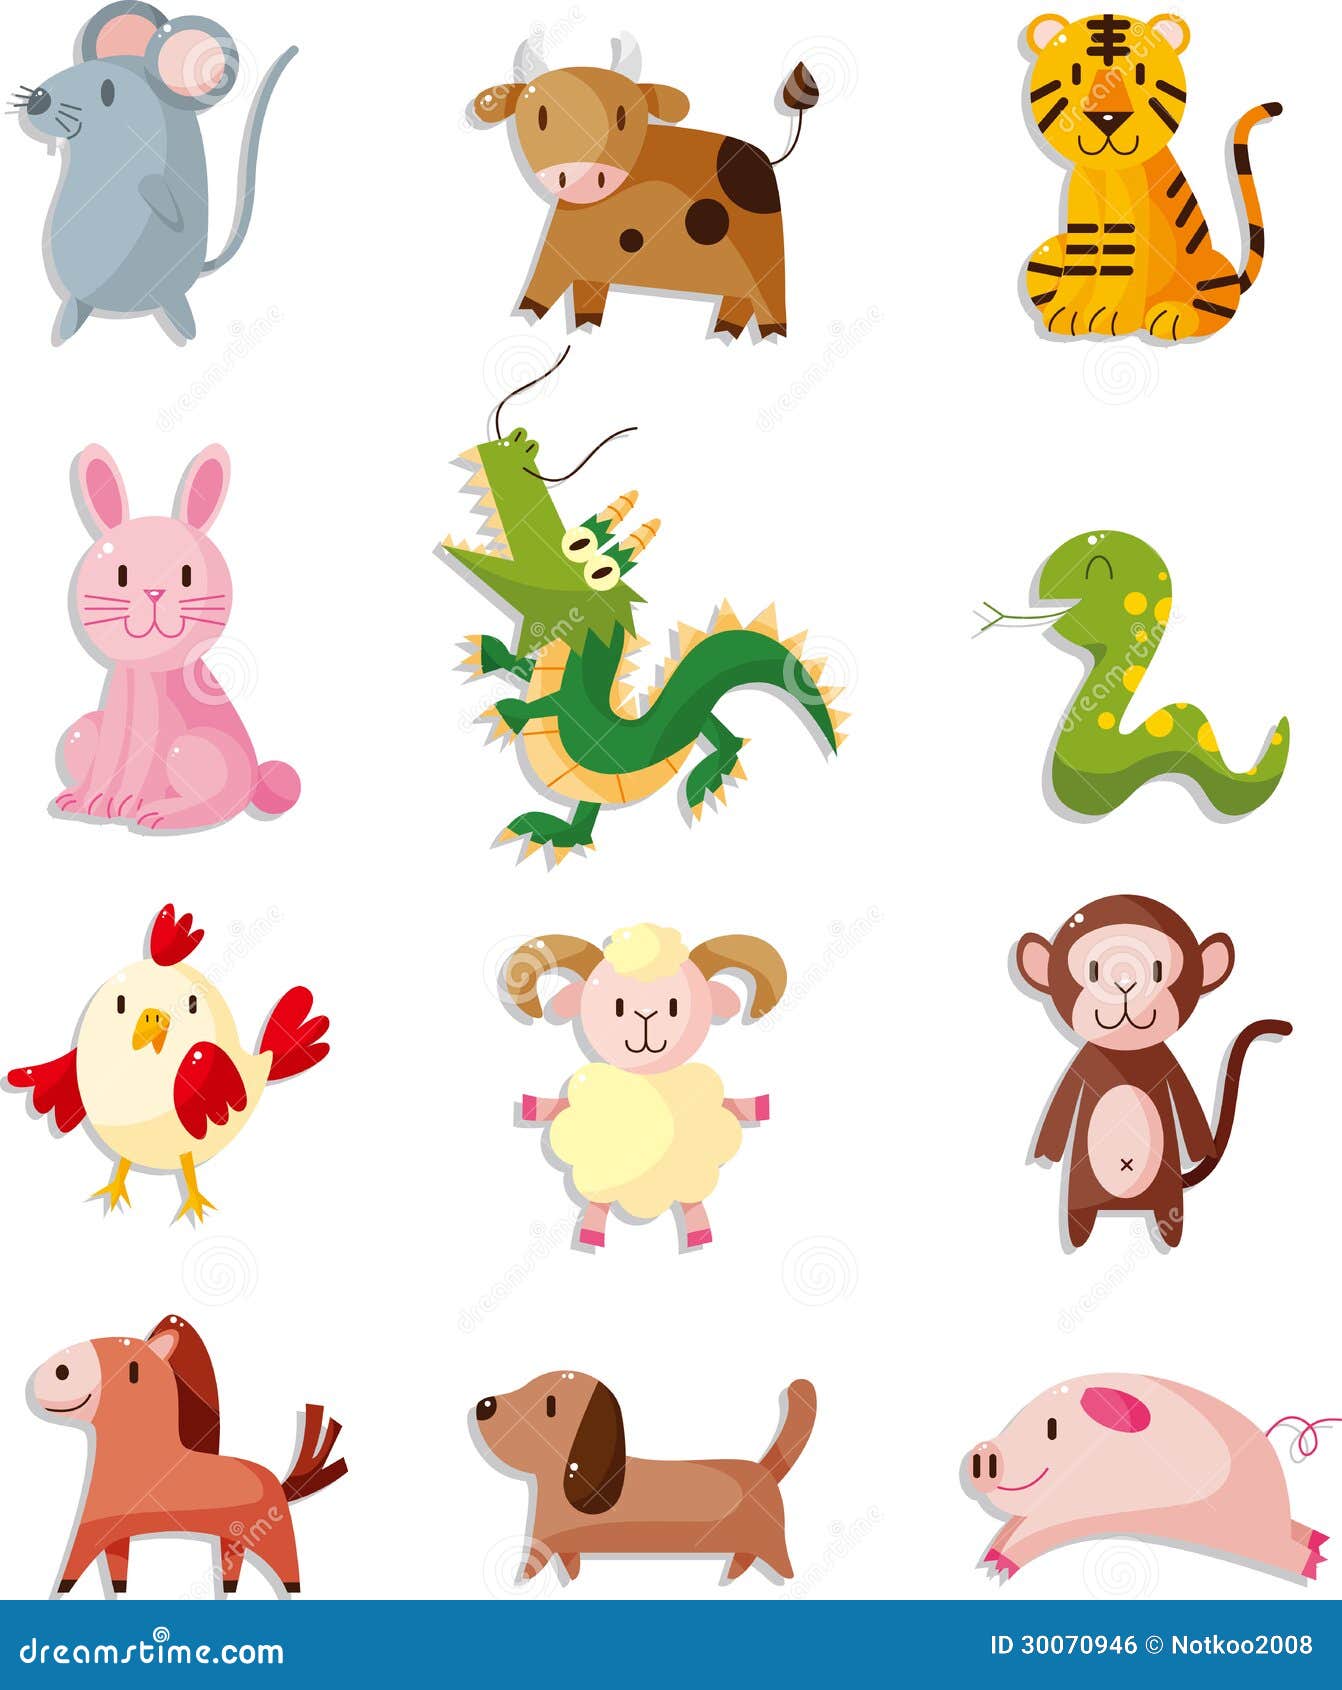 12 animal icon set,chinese zodiac animal